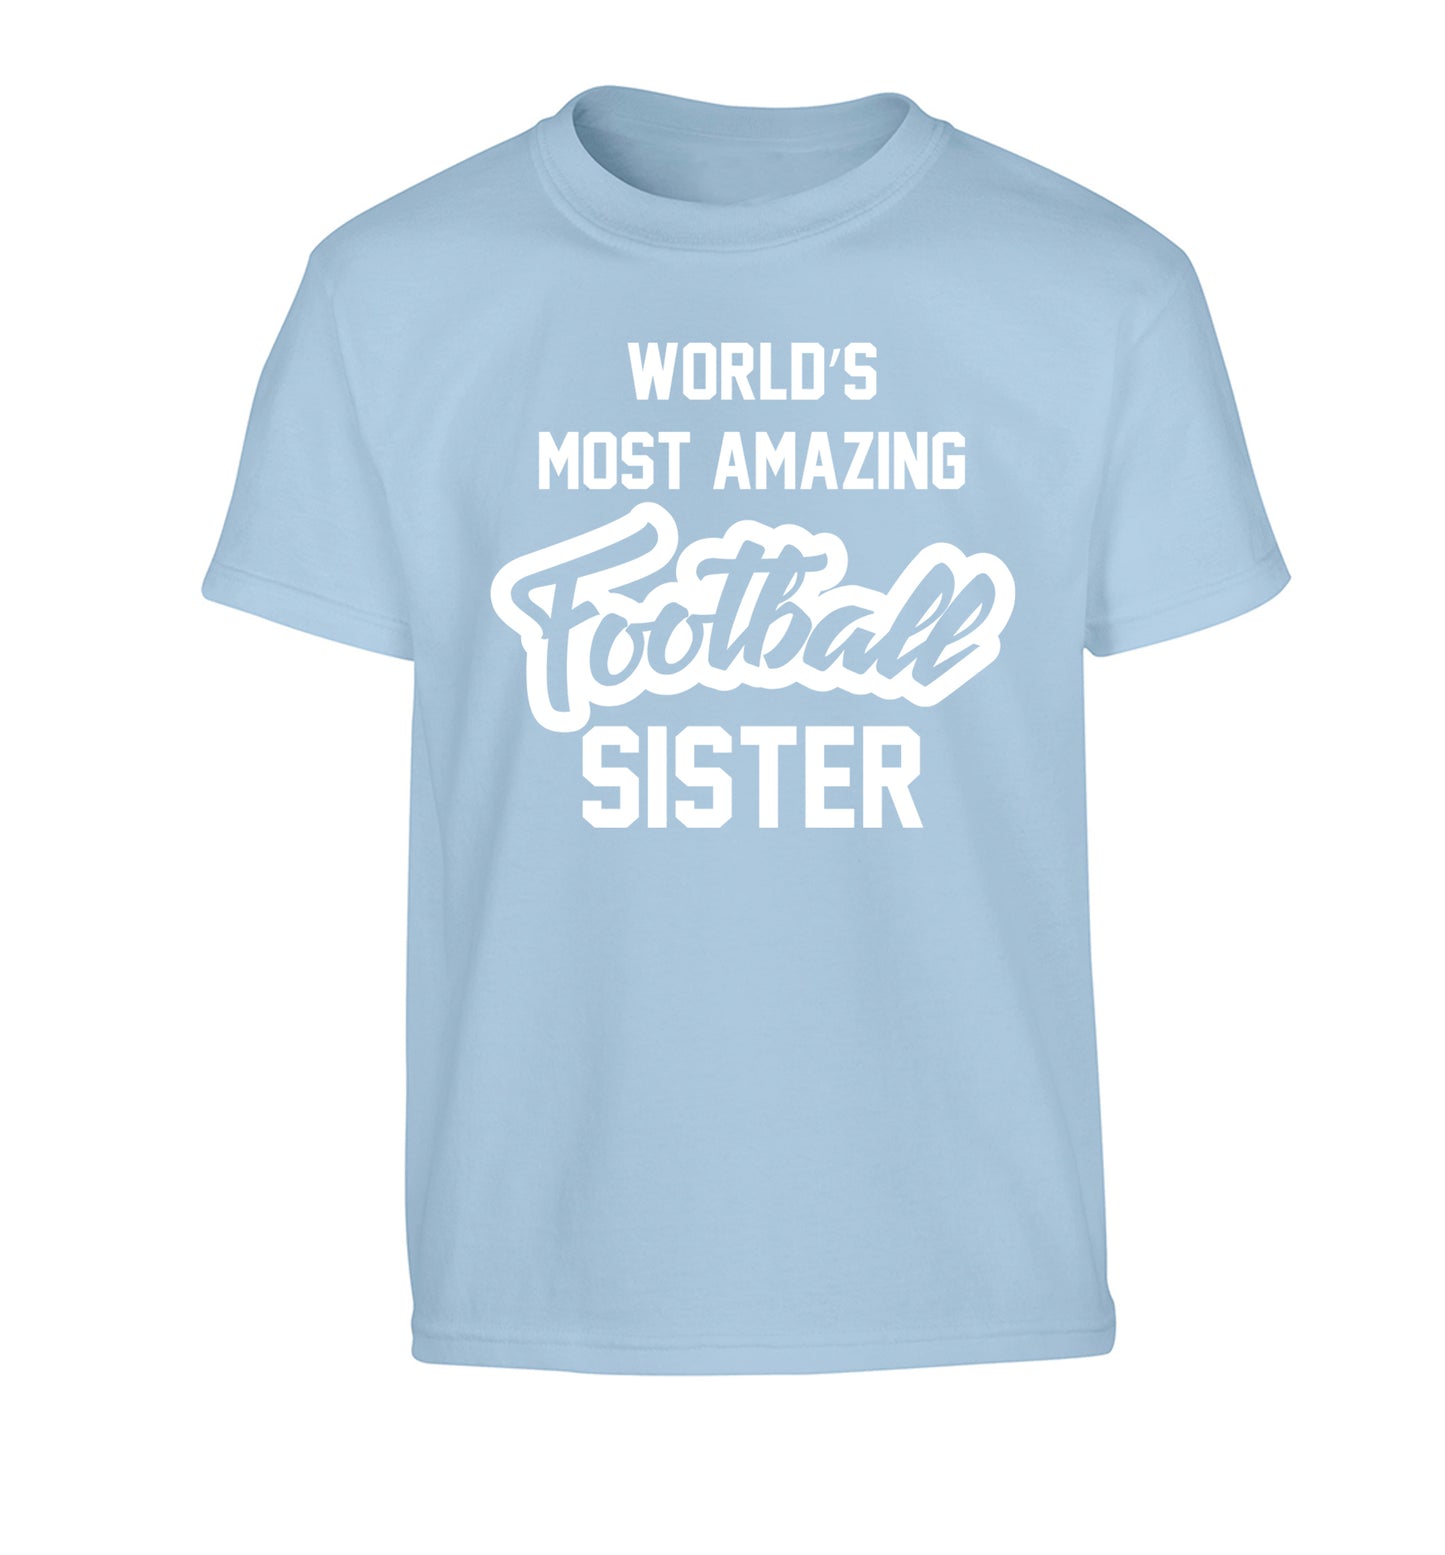 Worlds most amazing football sister Children's light blue Tshirt 12-14 Years